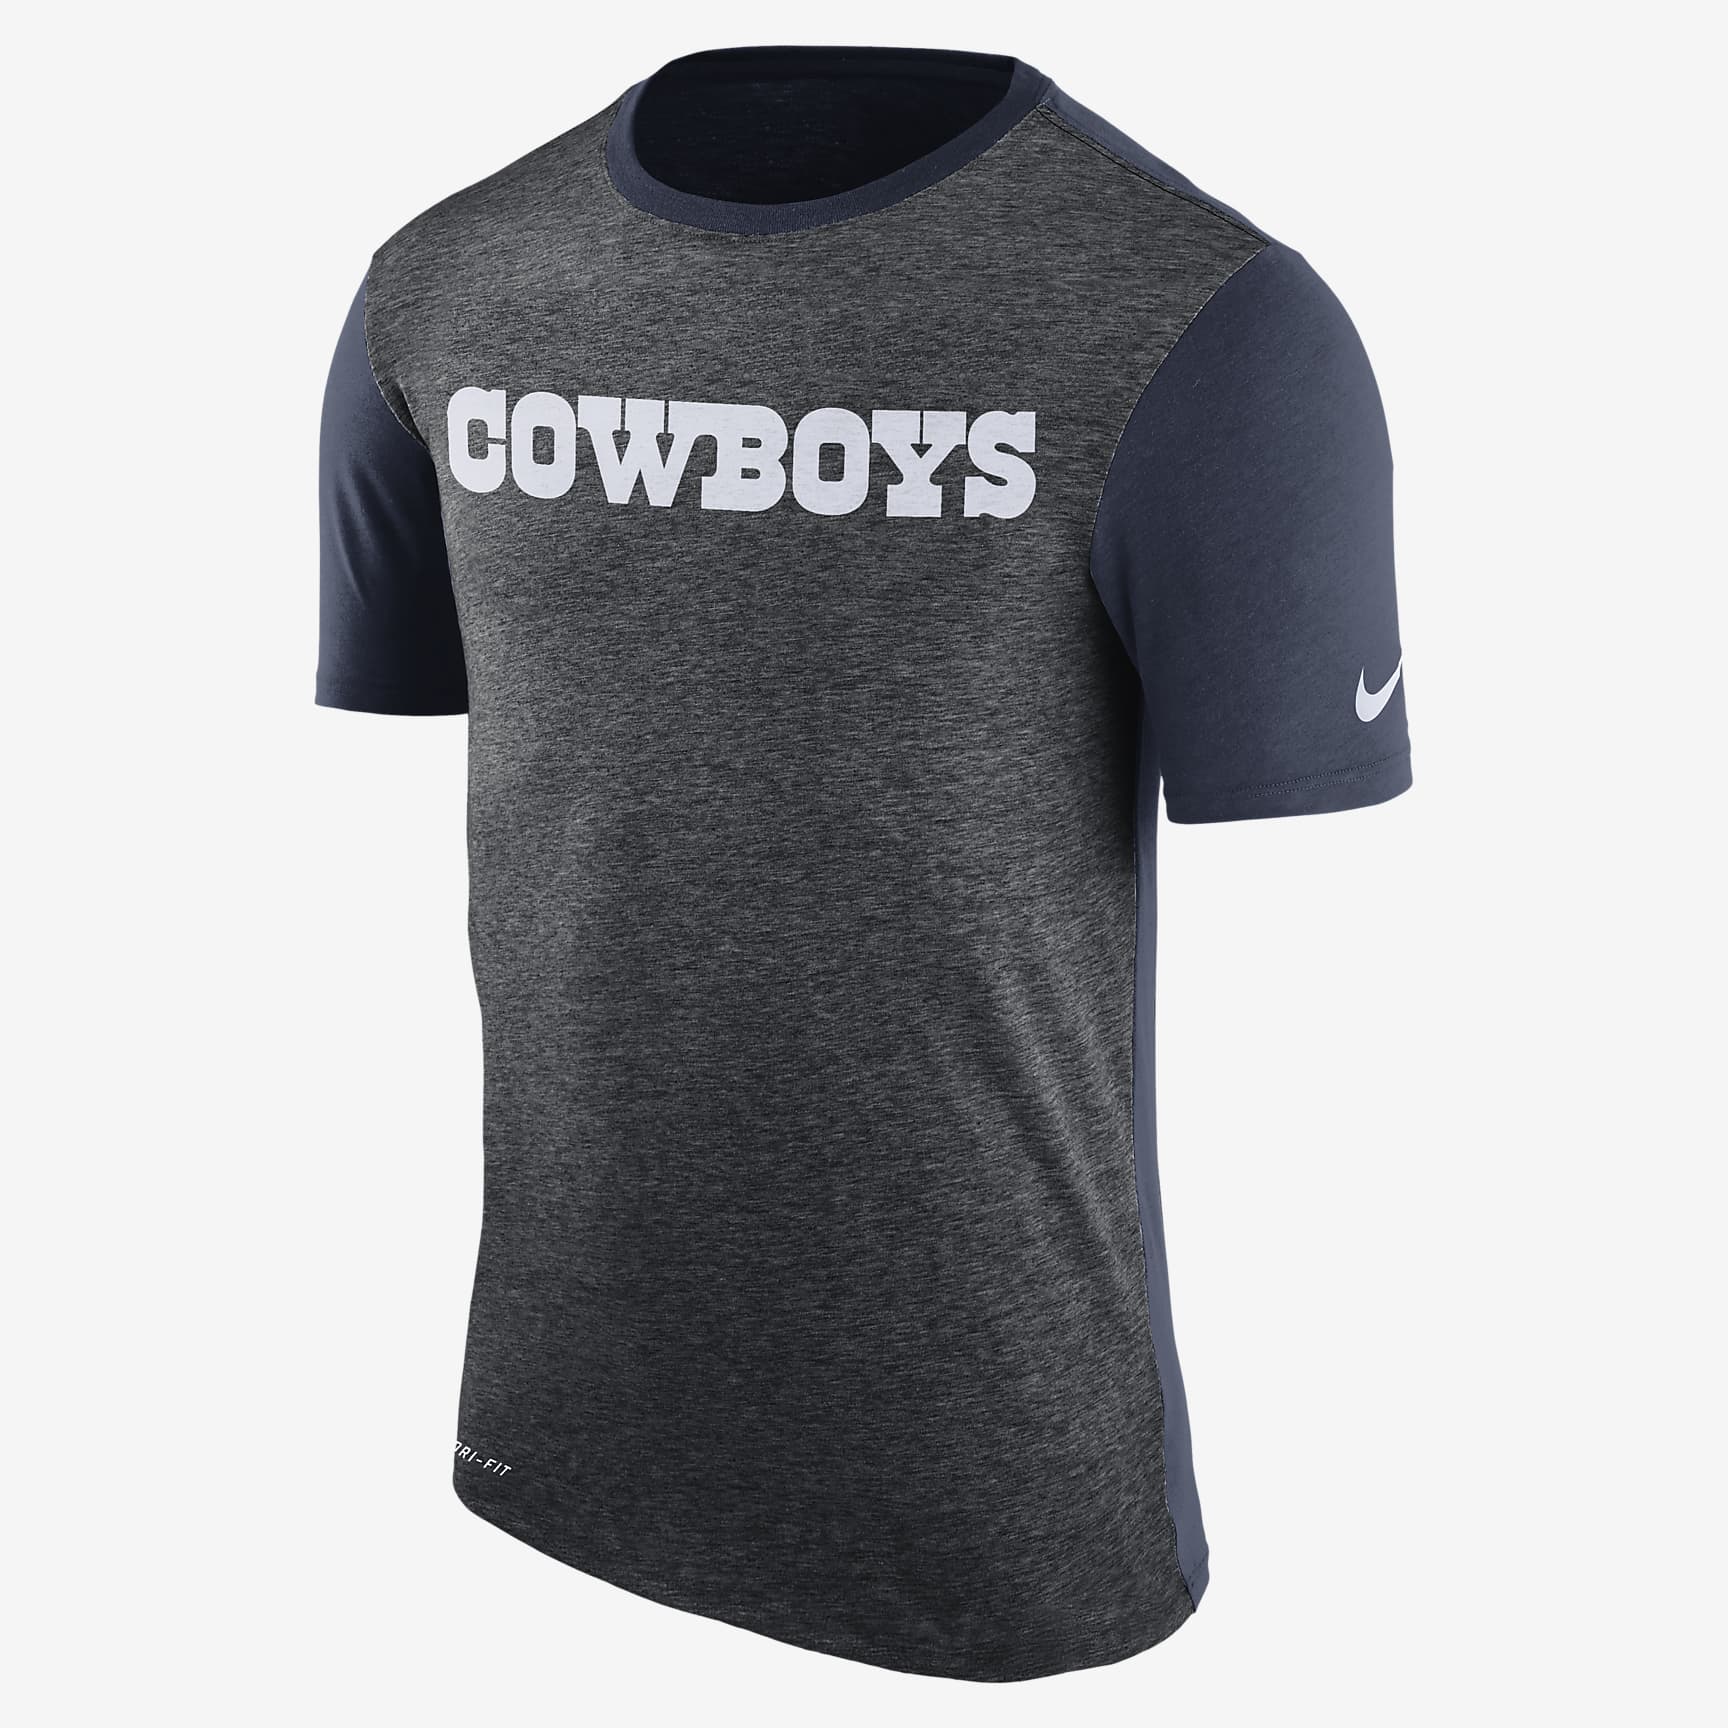 Nike Dry Color Dip (NFL Cowboys) Men's T-Shirt. Nike HR